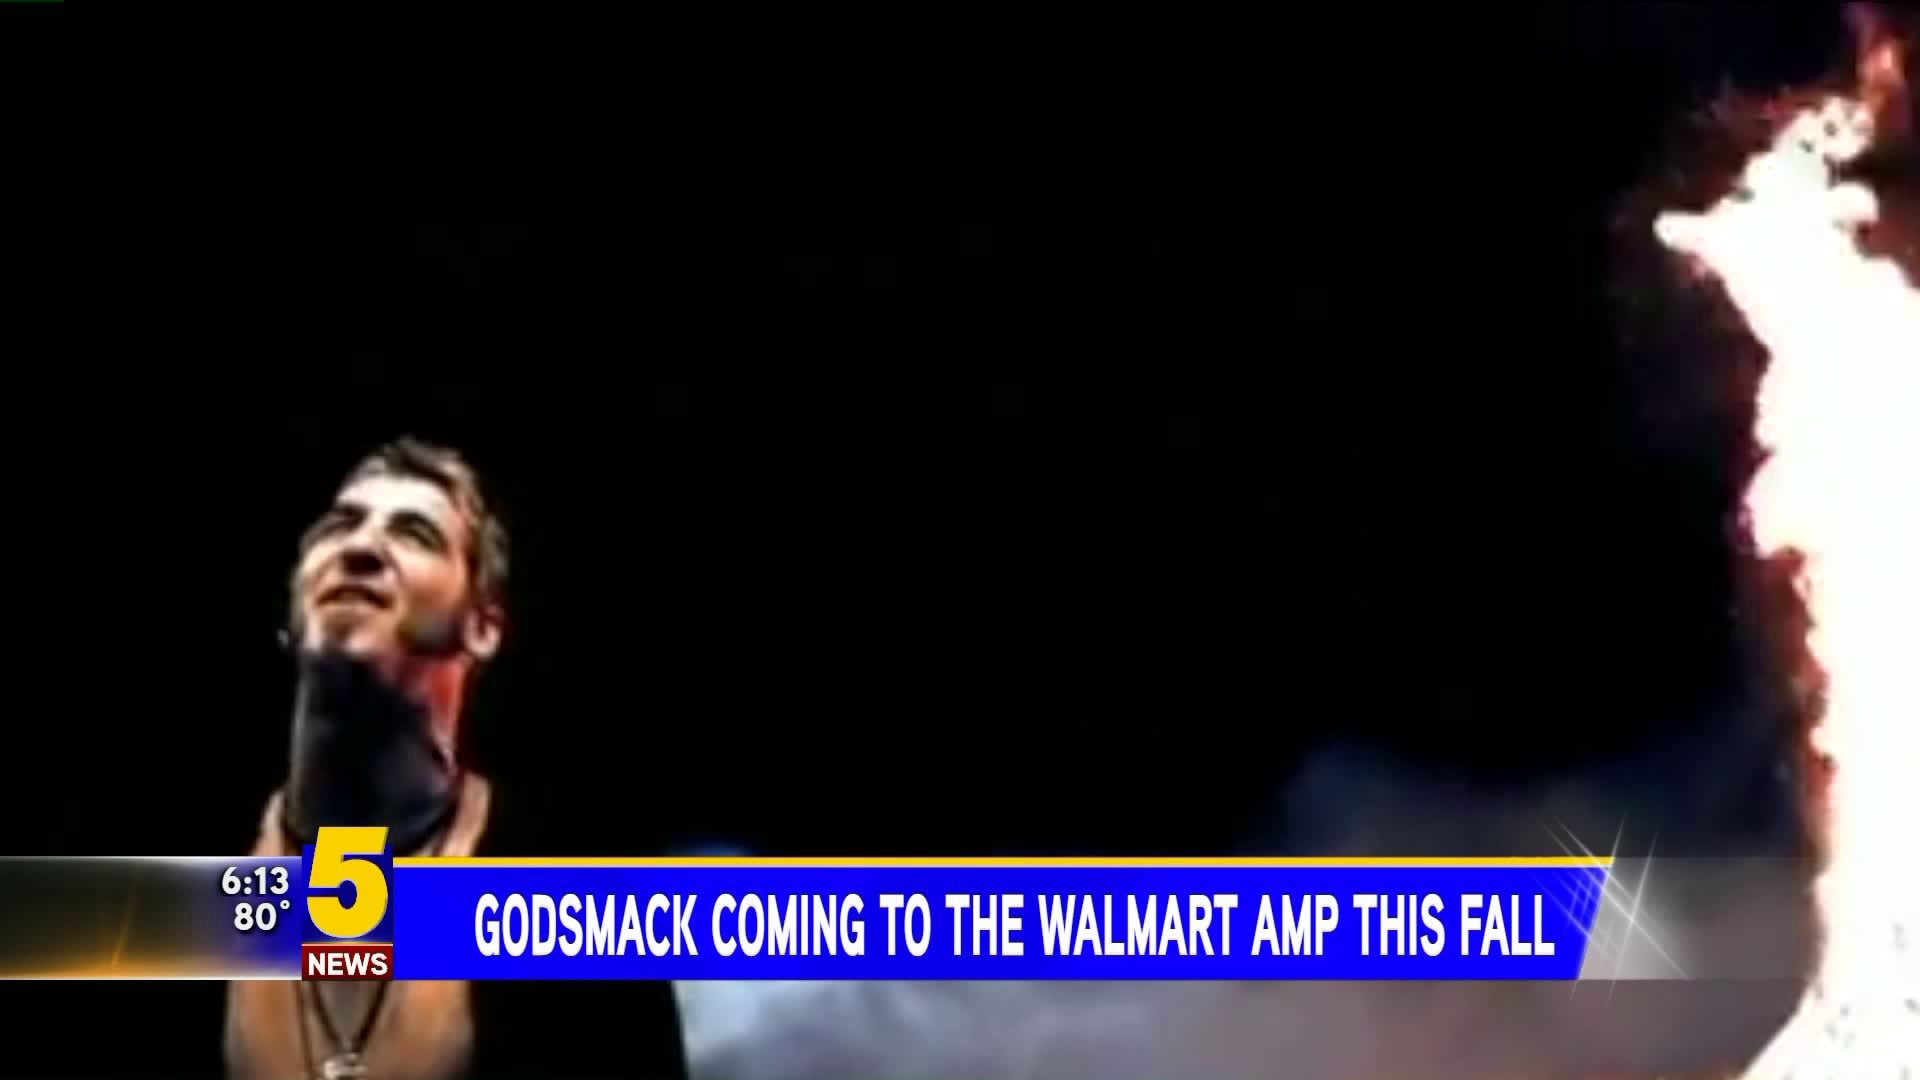 Godsmack Coming to Walmart AMP